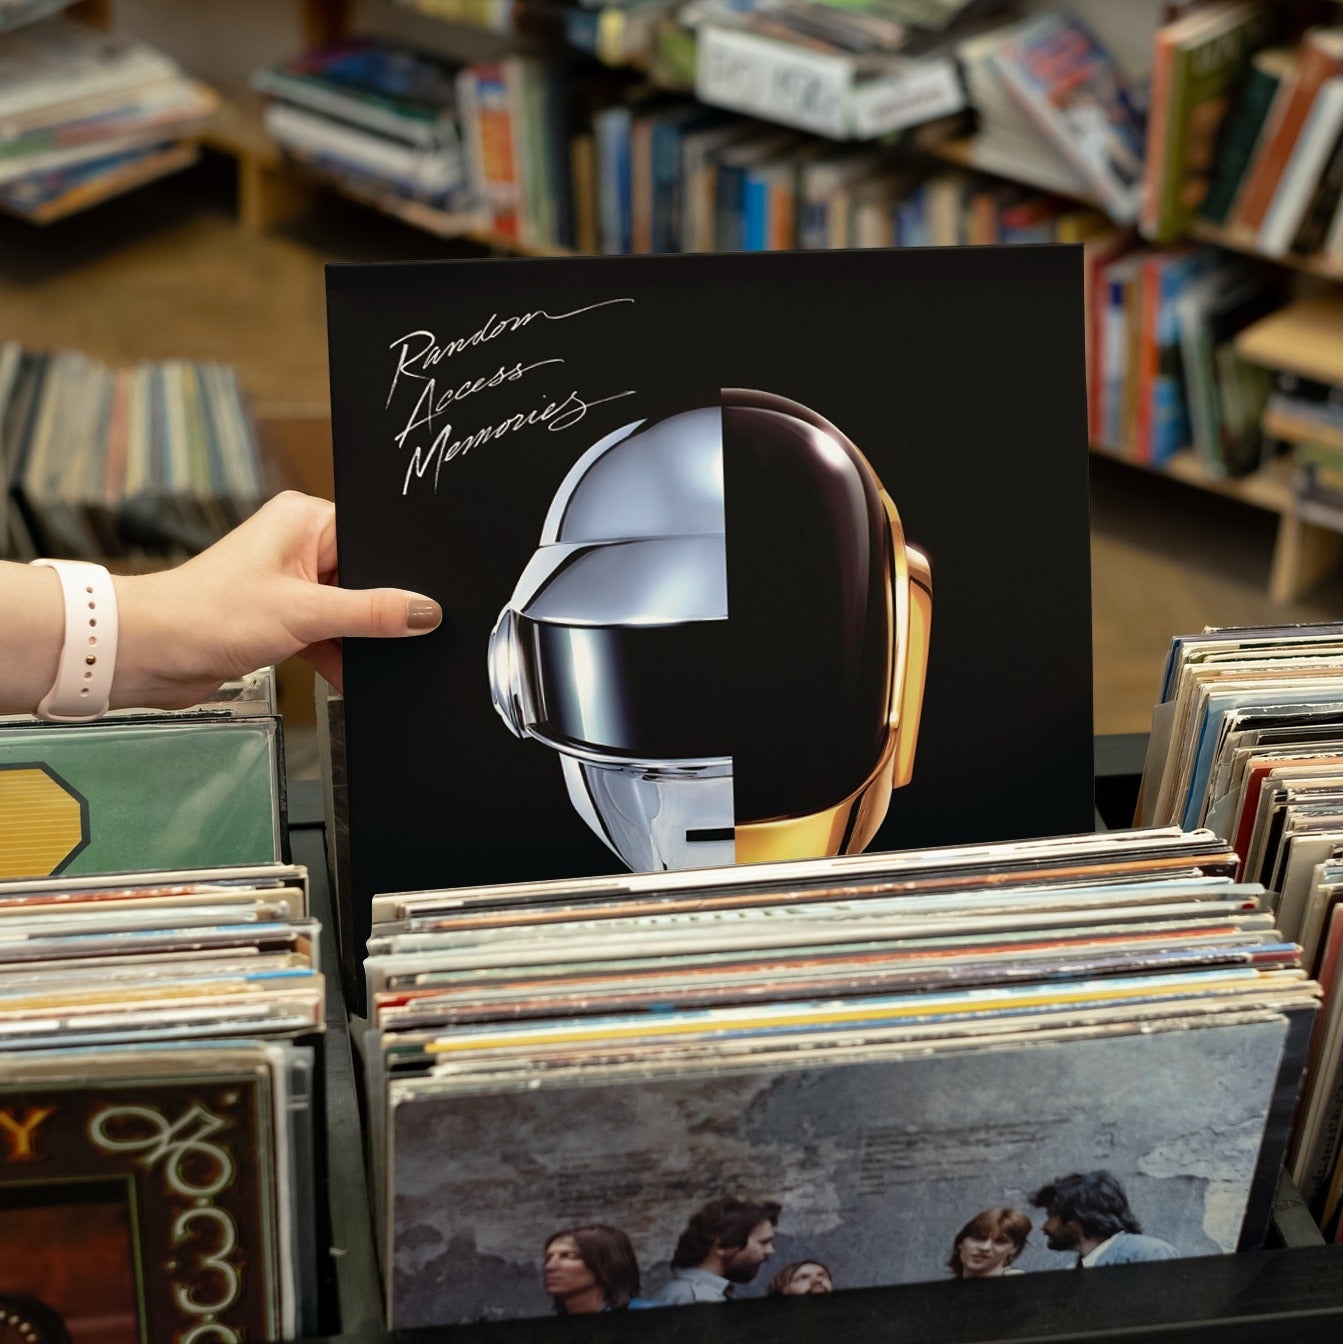 Daft Punk- Random Access Memories (Vinyl)